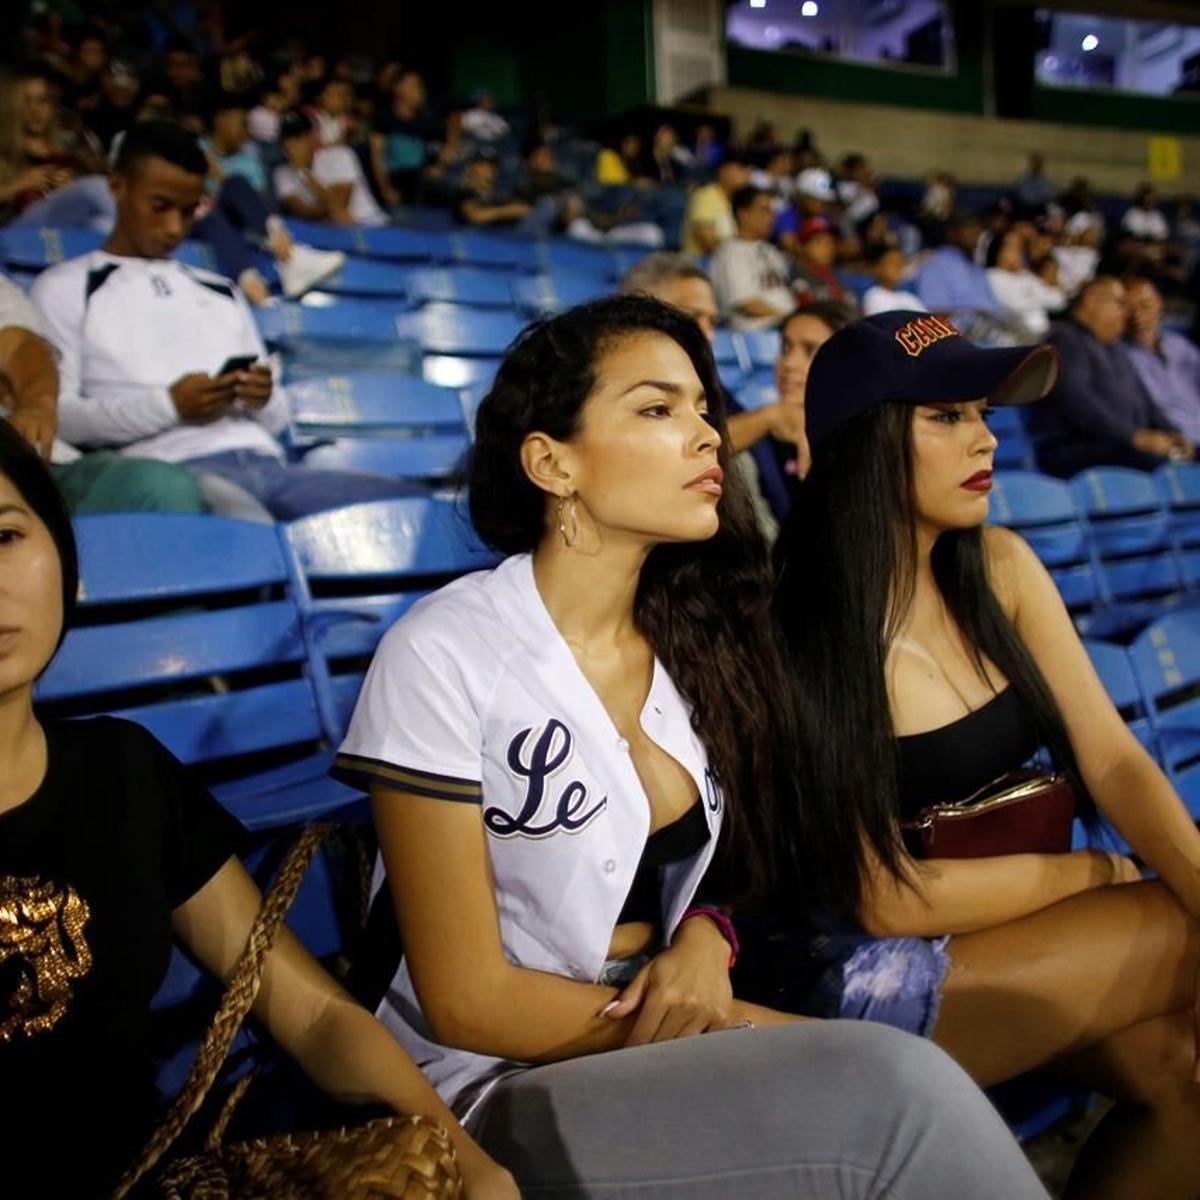 Crisis throws curve ball at opening of Venezuelan baseball